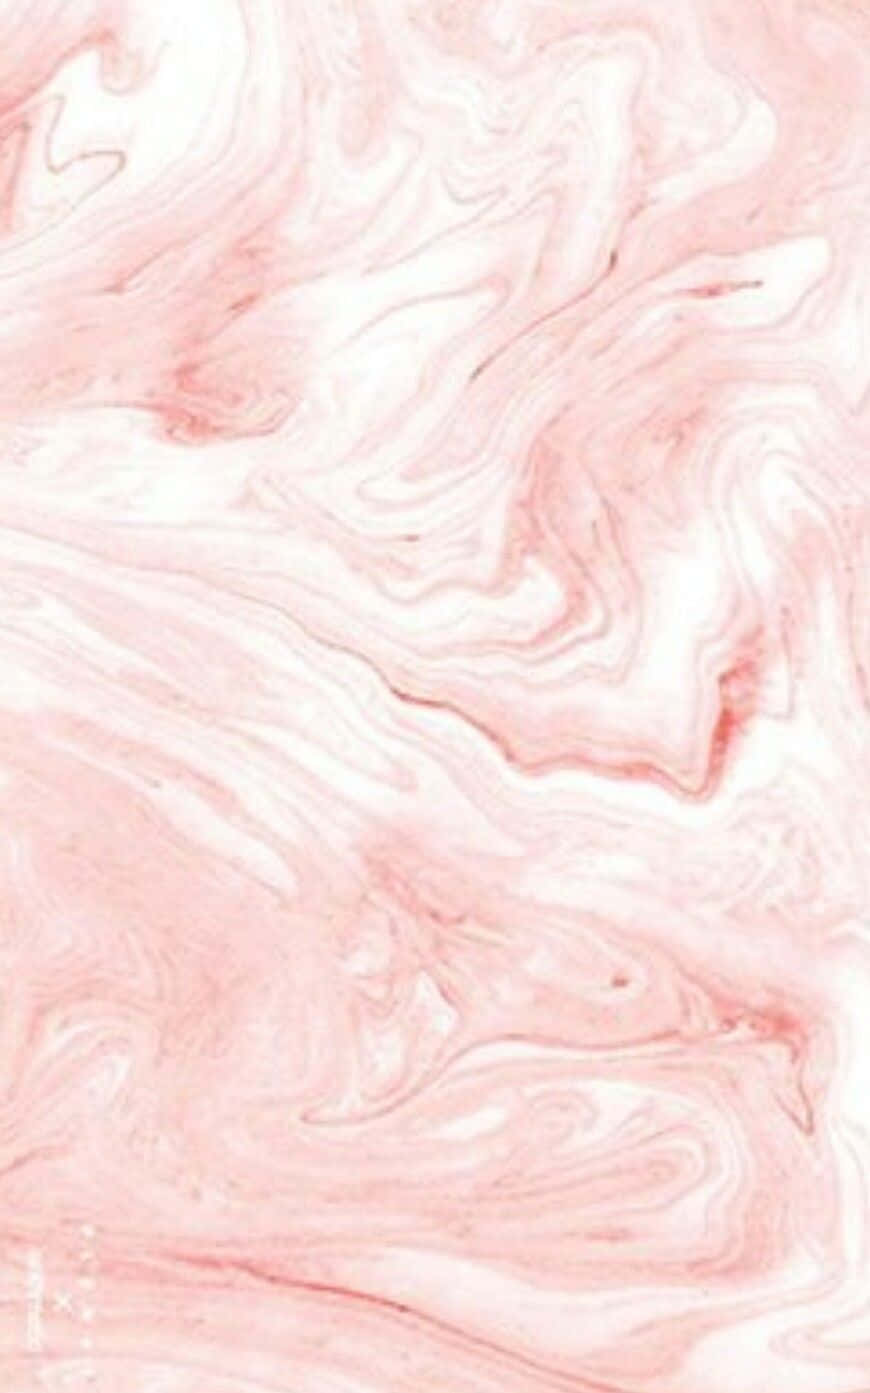 Blush Pink Marble Texture Wallpaper